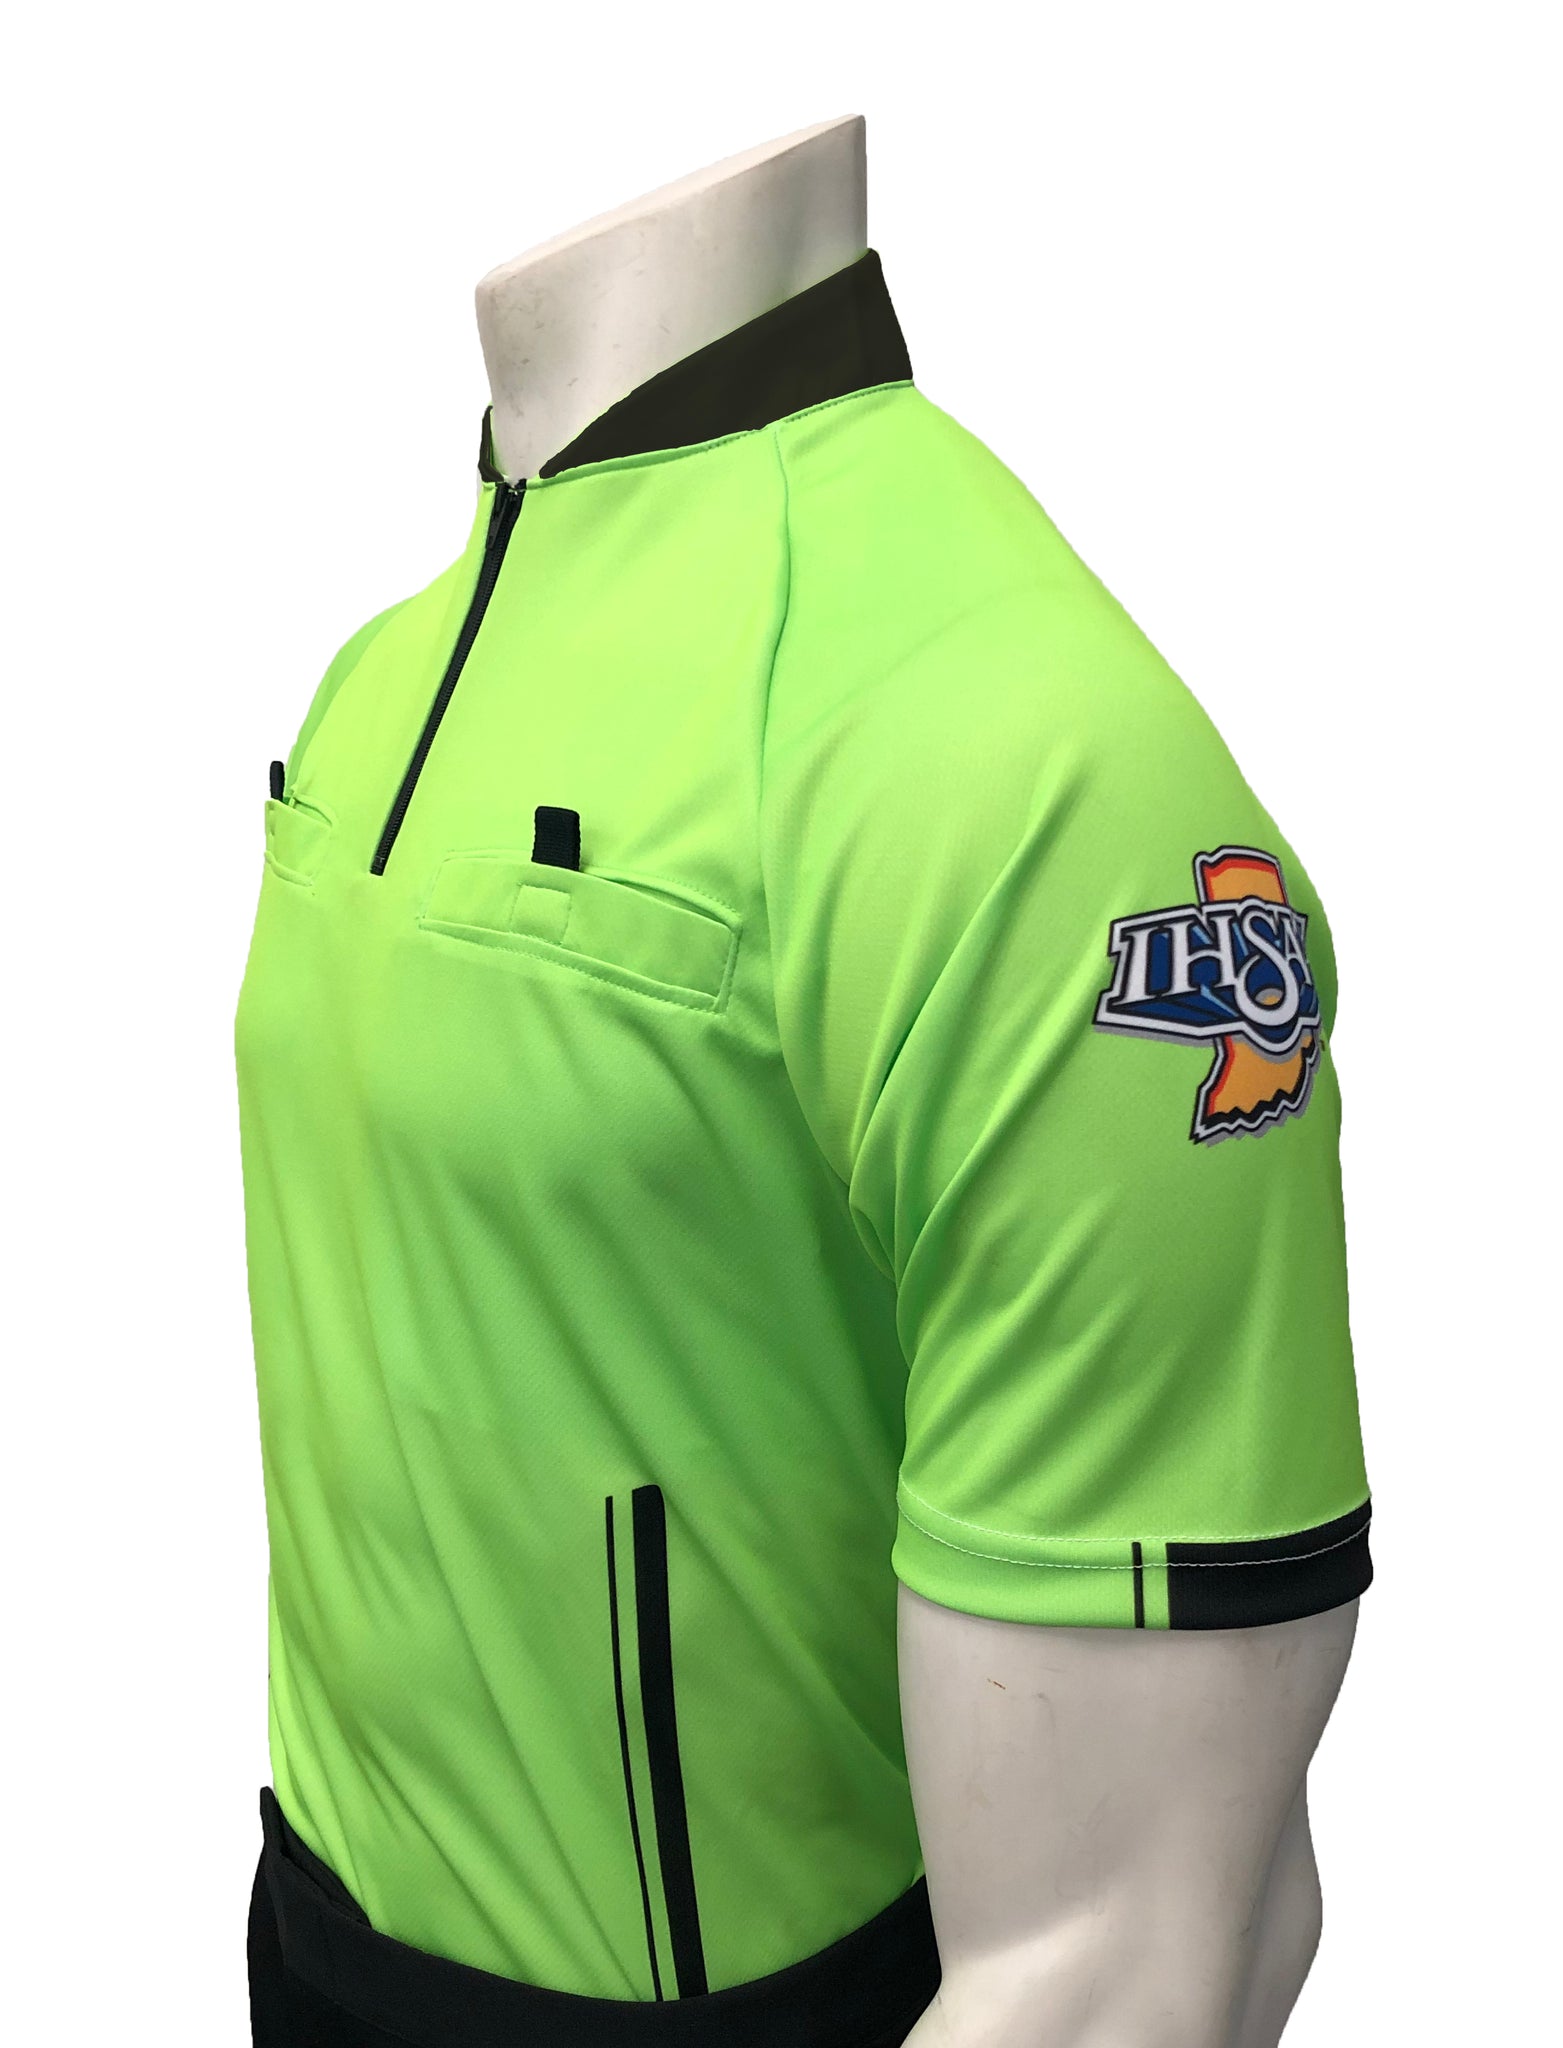 USA900IN-FG- Smitty "Made in USA" - "PERFORMANCE MESH" "IHSAA" Florescent Green Short Sleeve Soccer Shirt